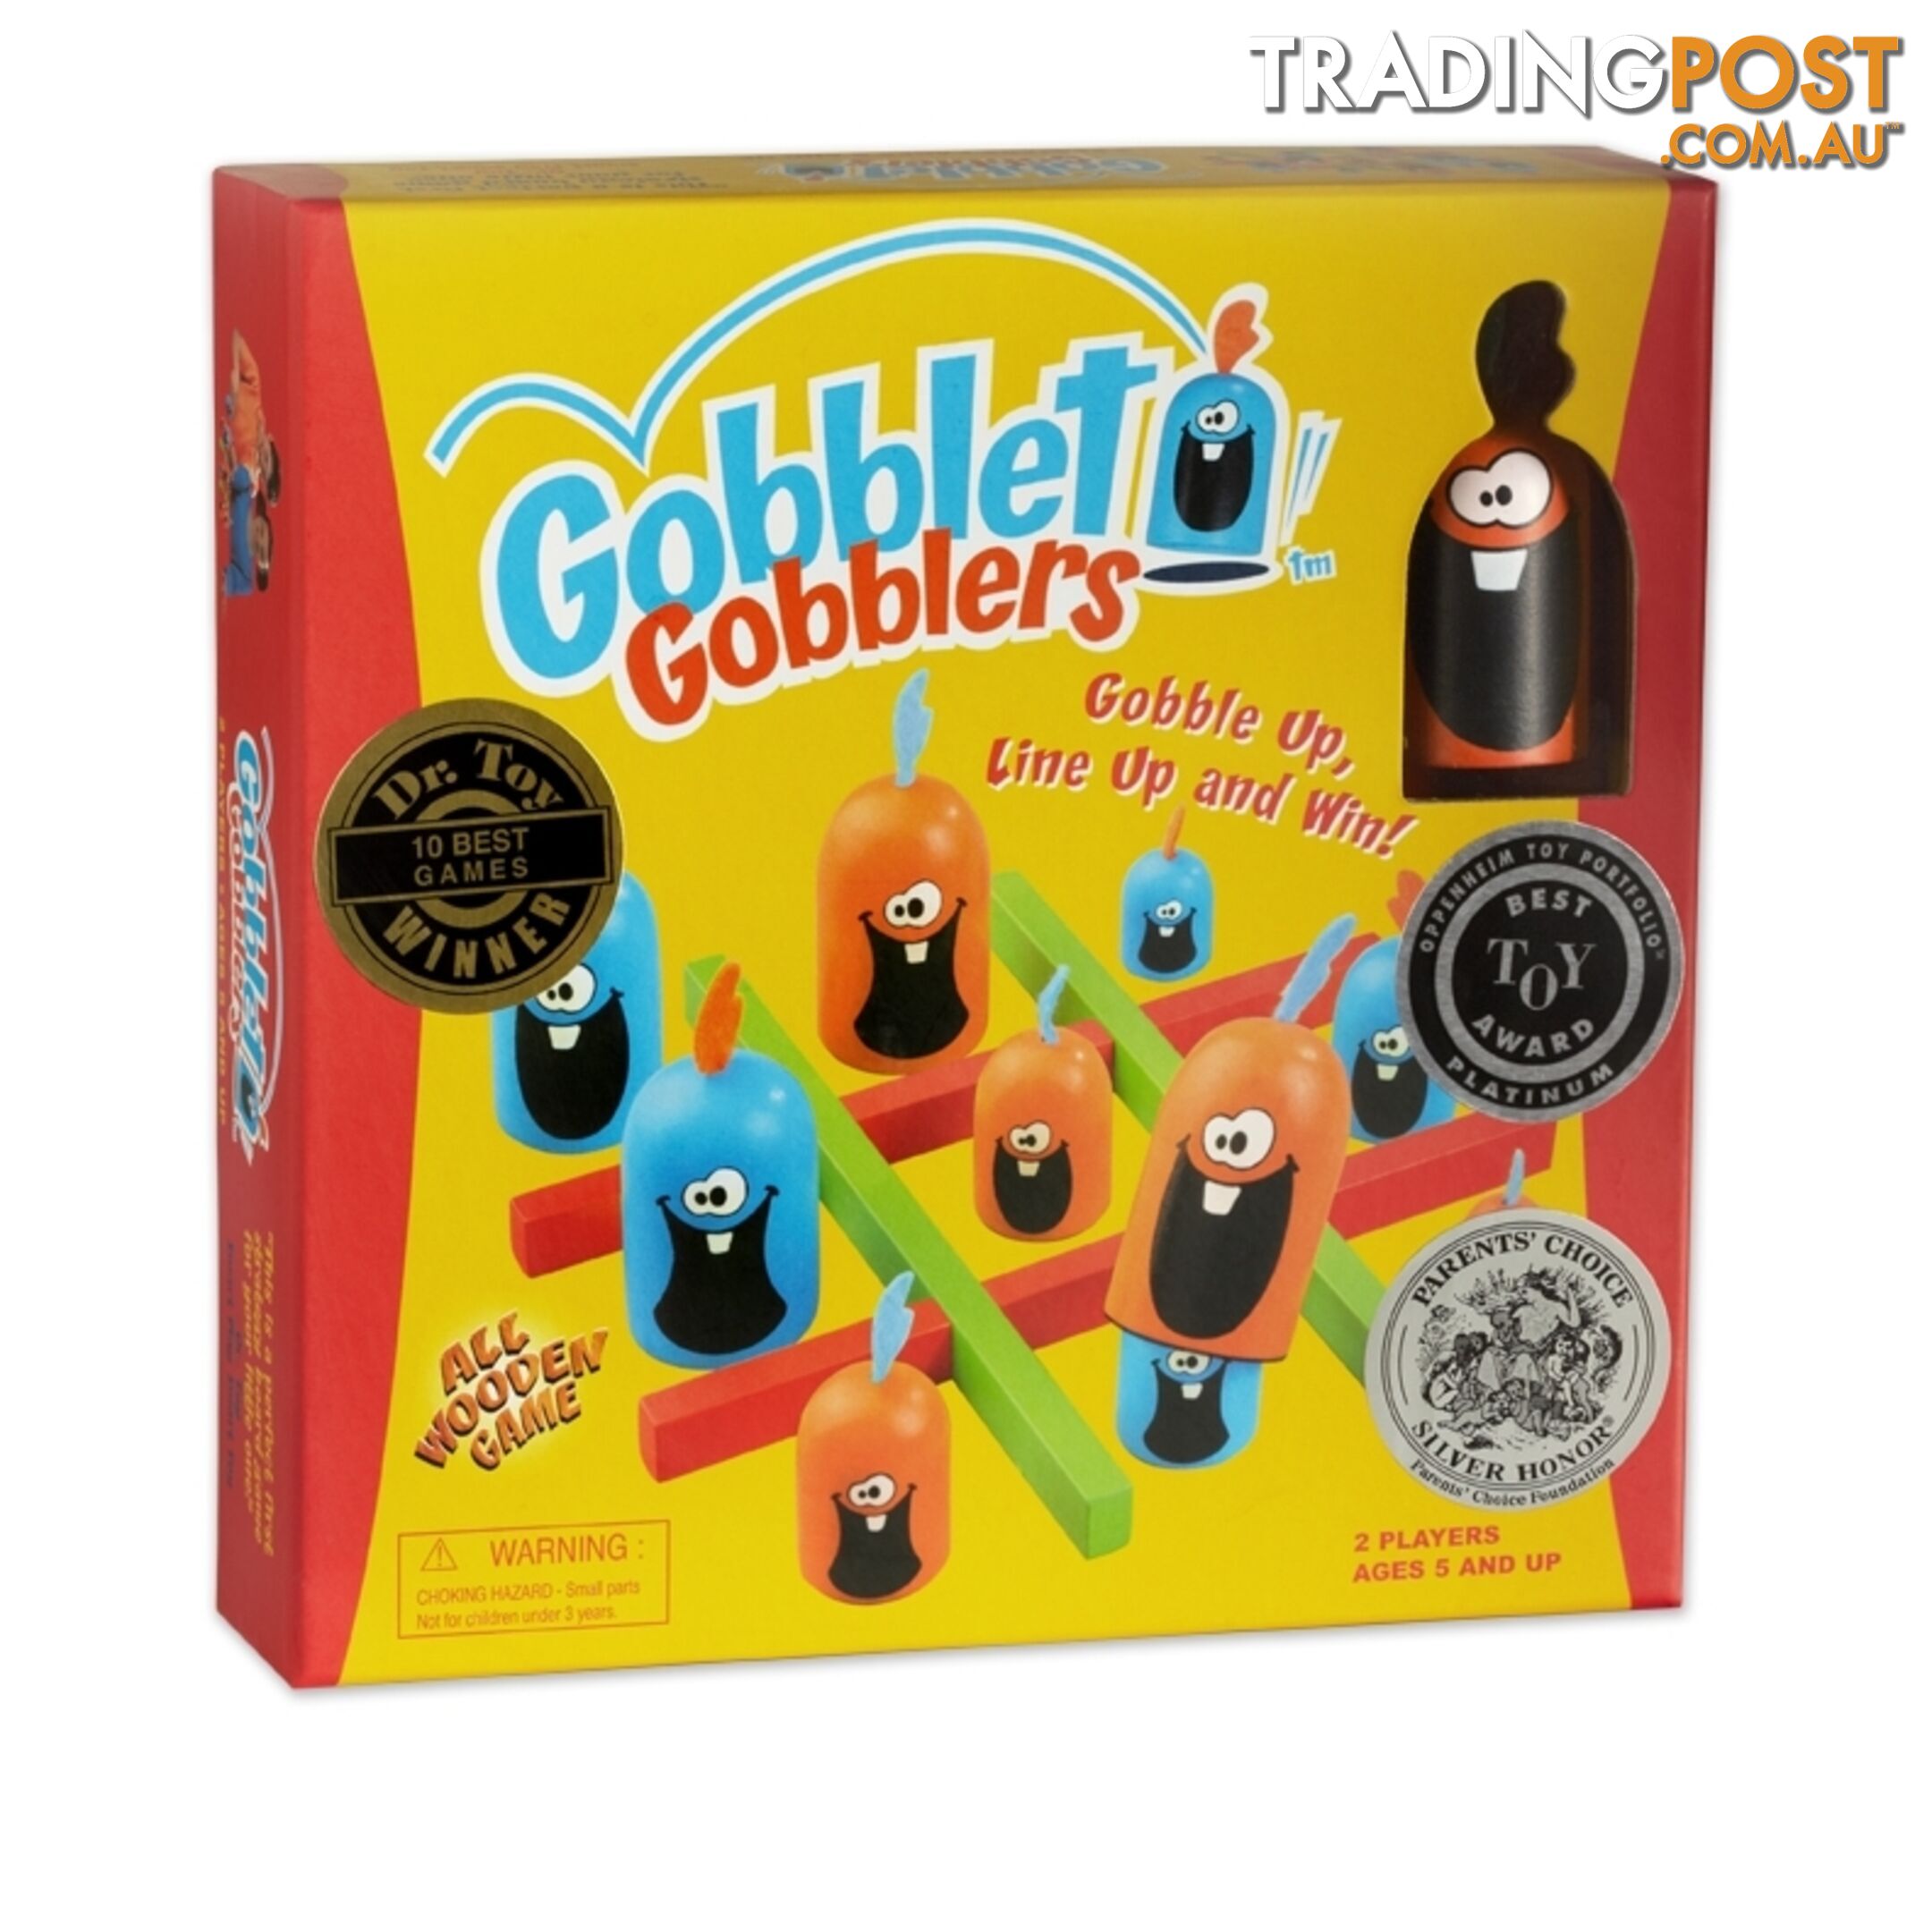 Gobblet Gobblers - Blue Orange Games - 803979001036